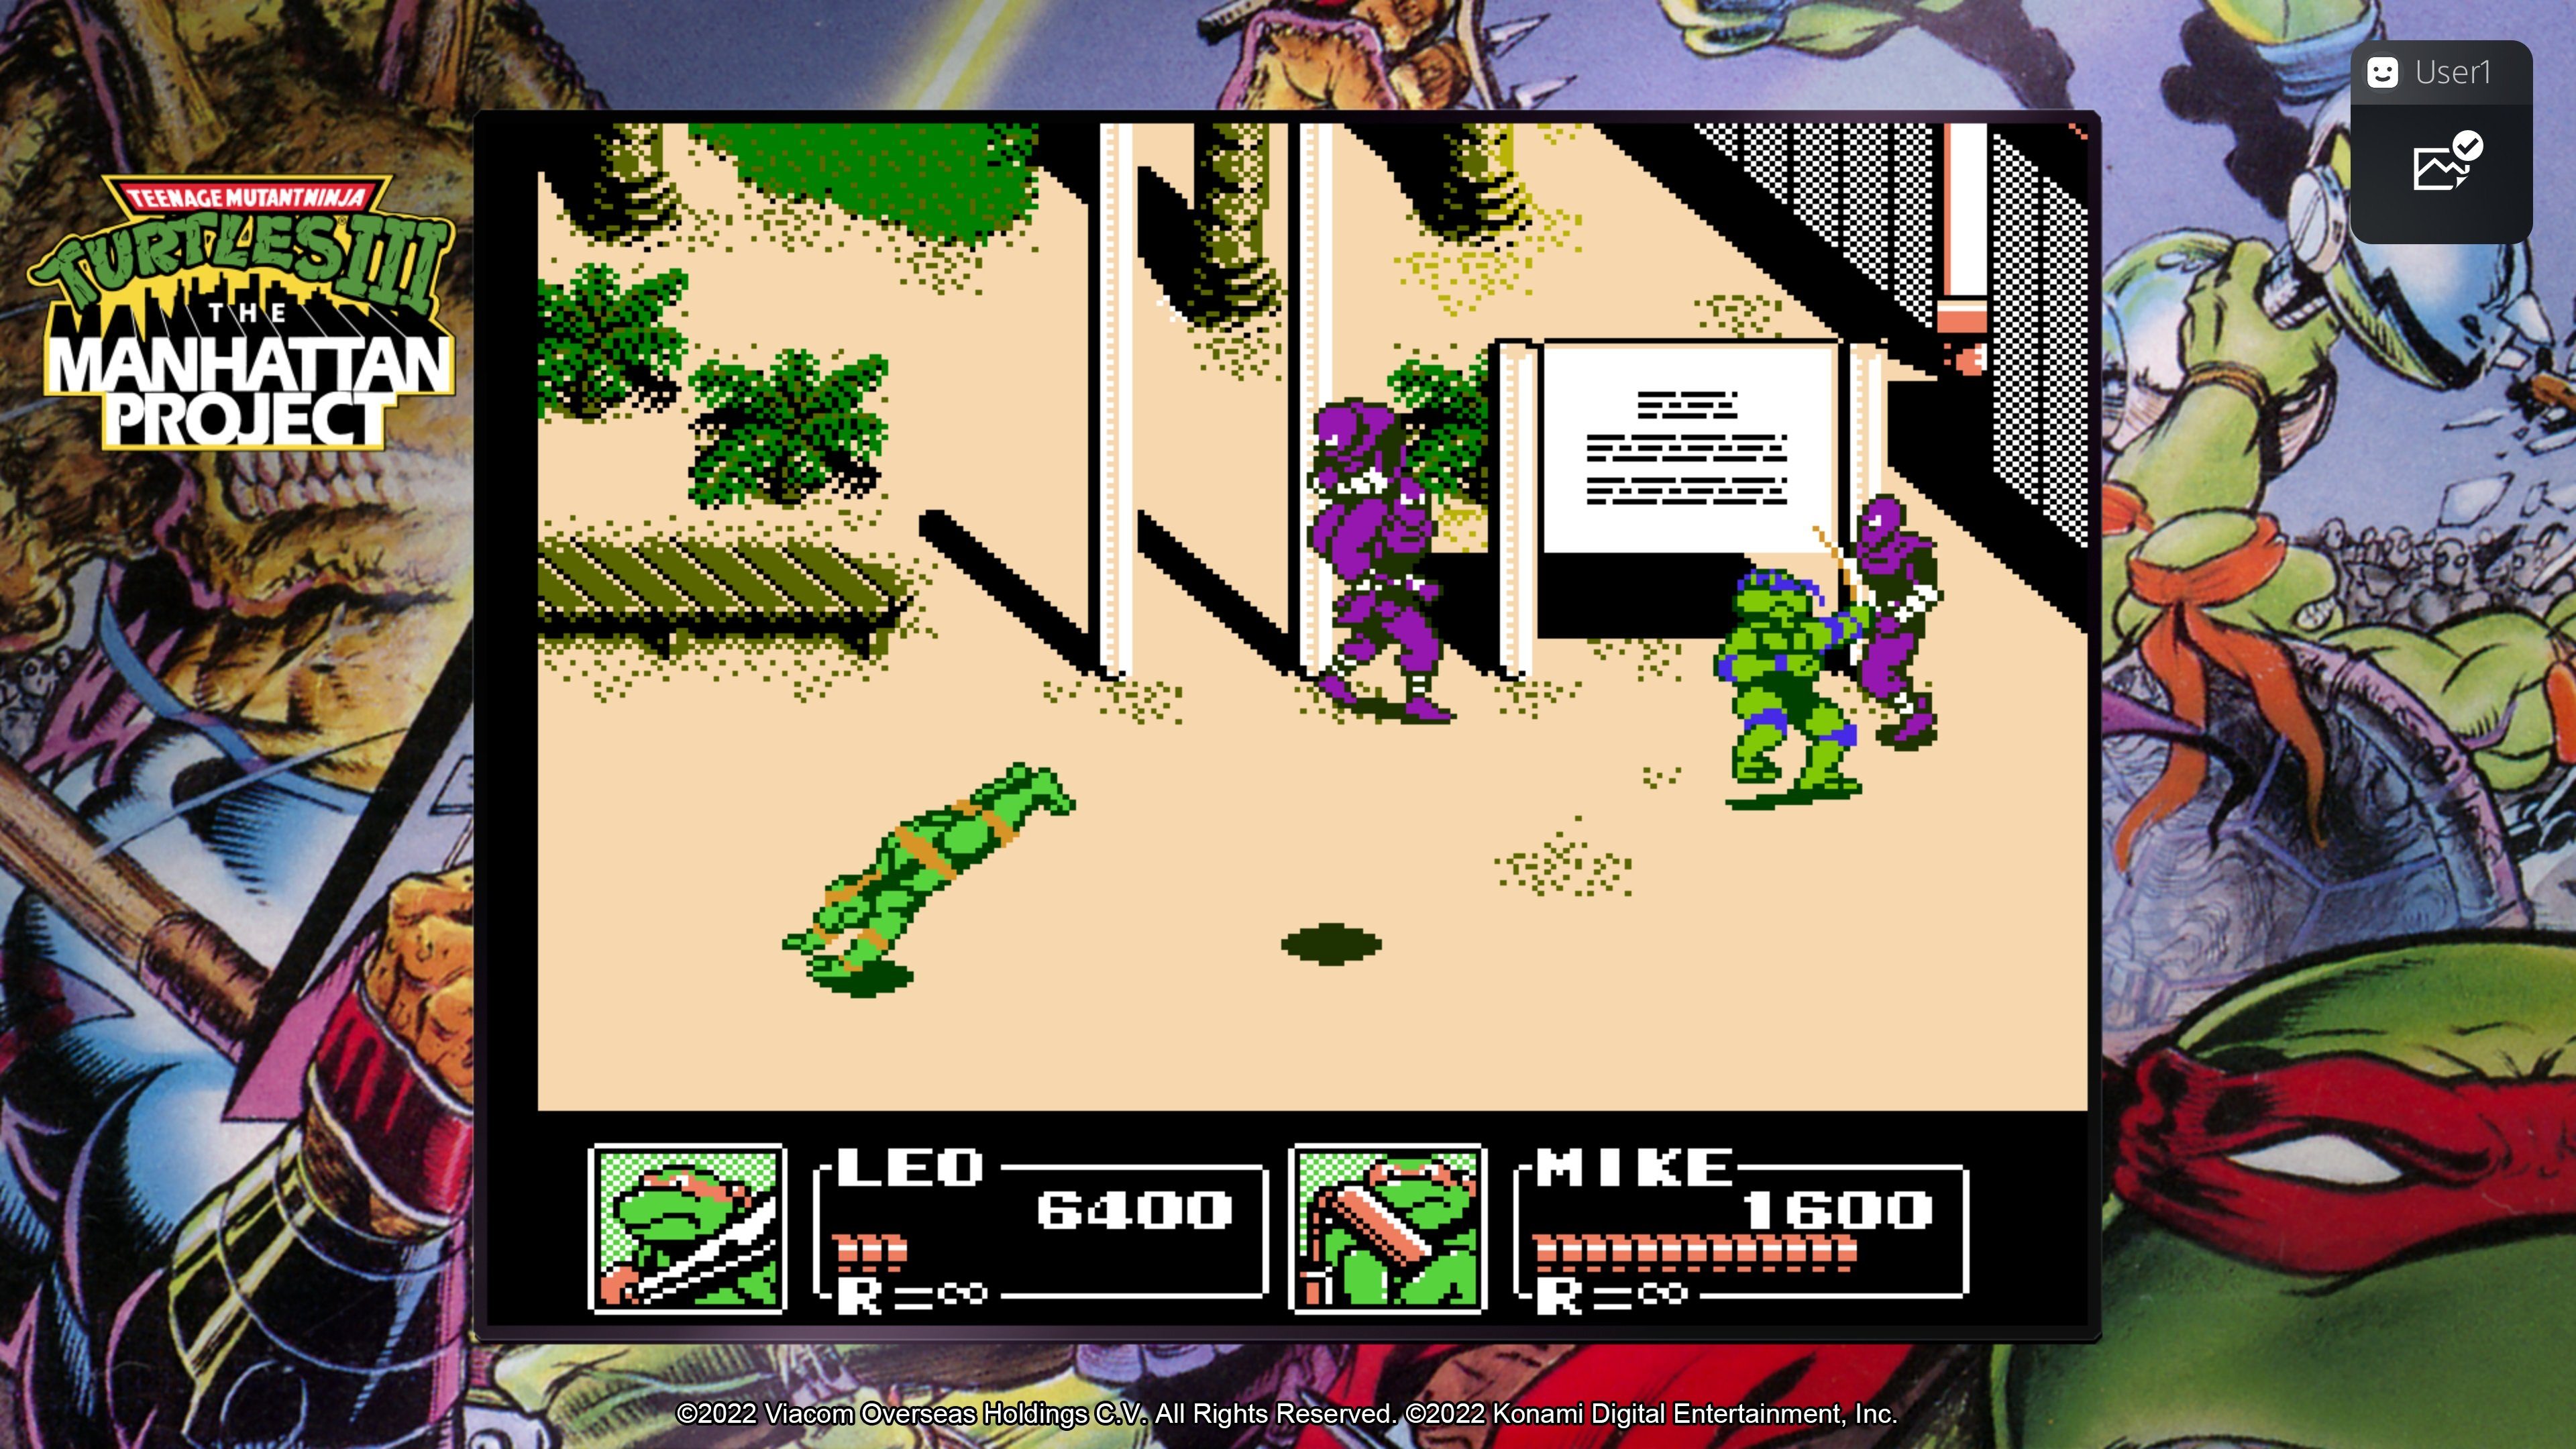 Ninja Switch Nintendo Teenage Turtles Collection Mutant Cowabunga Konami - The